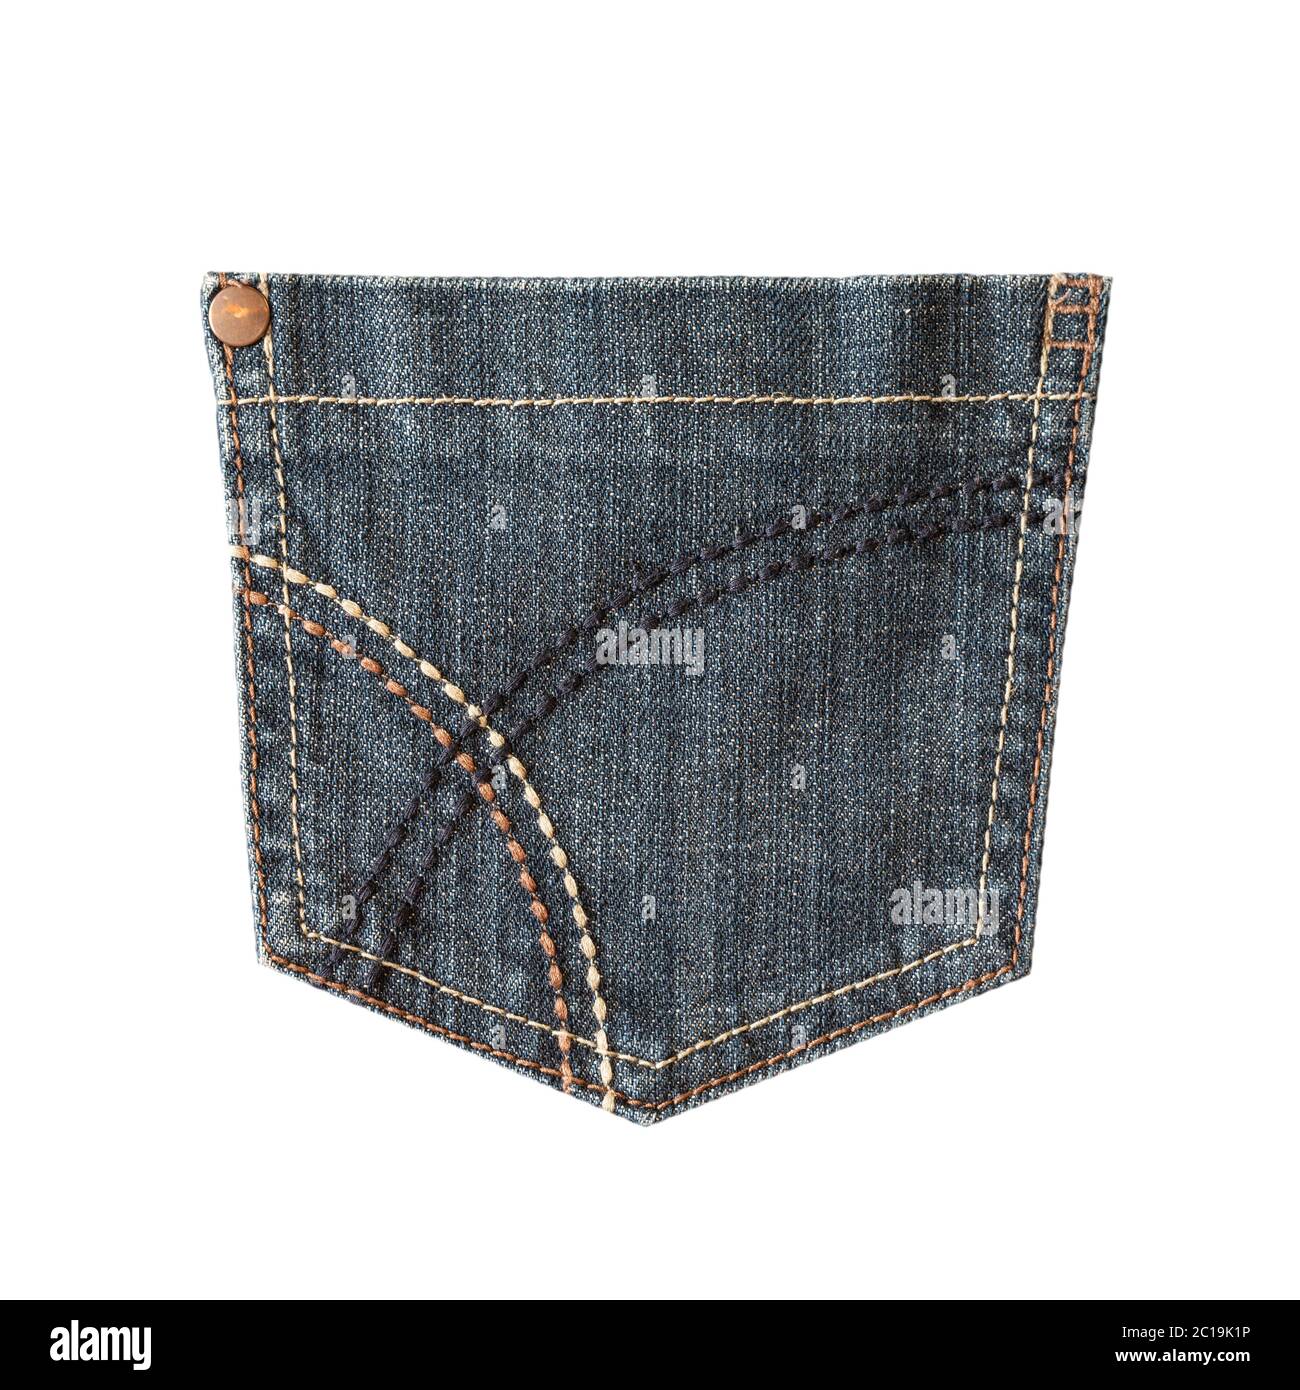 Jeans Pocket Styles